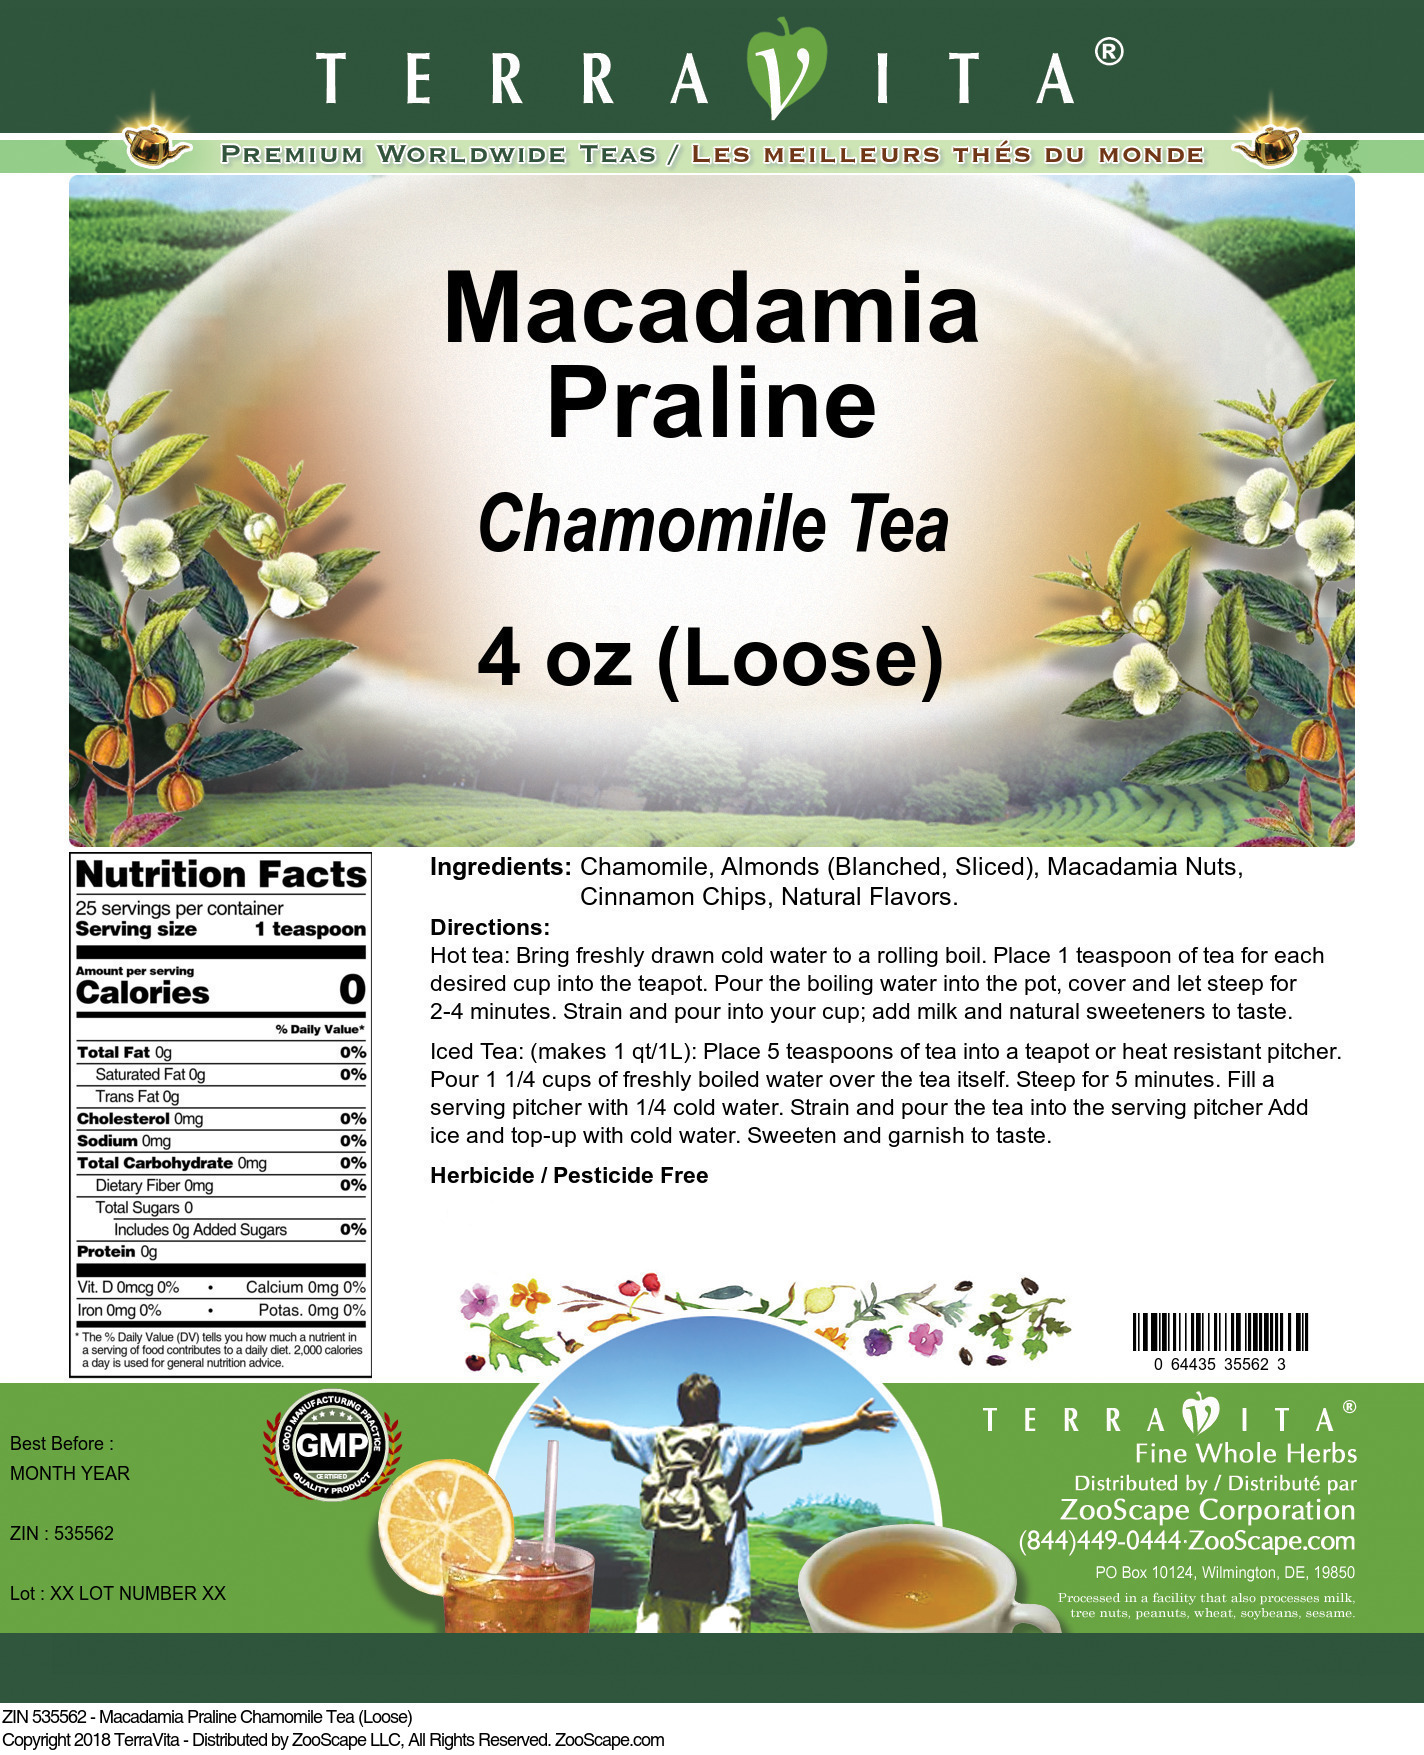 Macadamia Praline Chamomile Tea (Loose) - Label